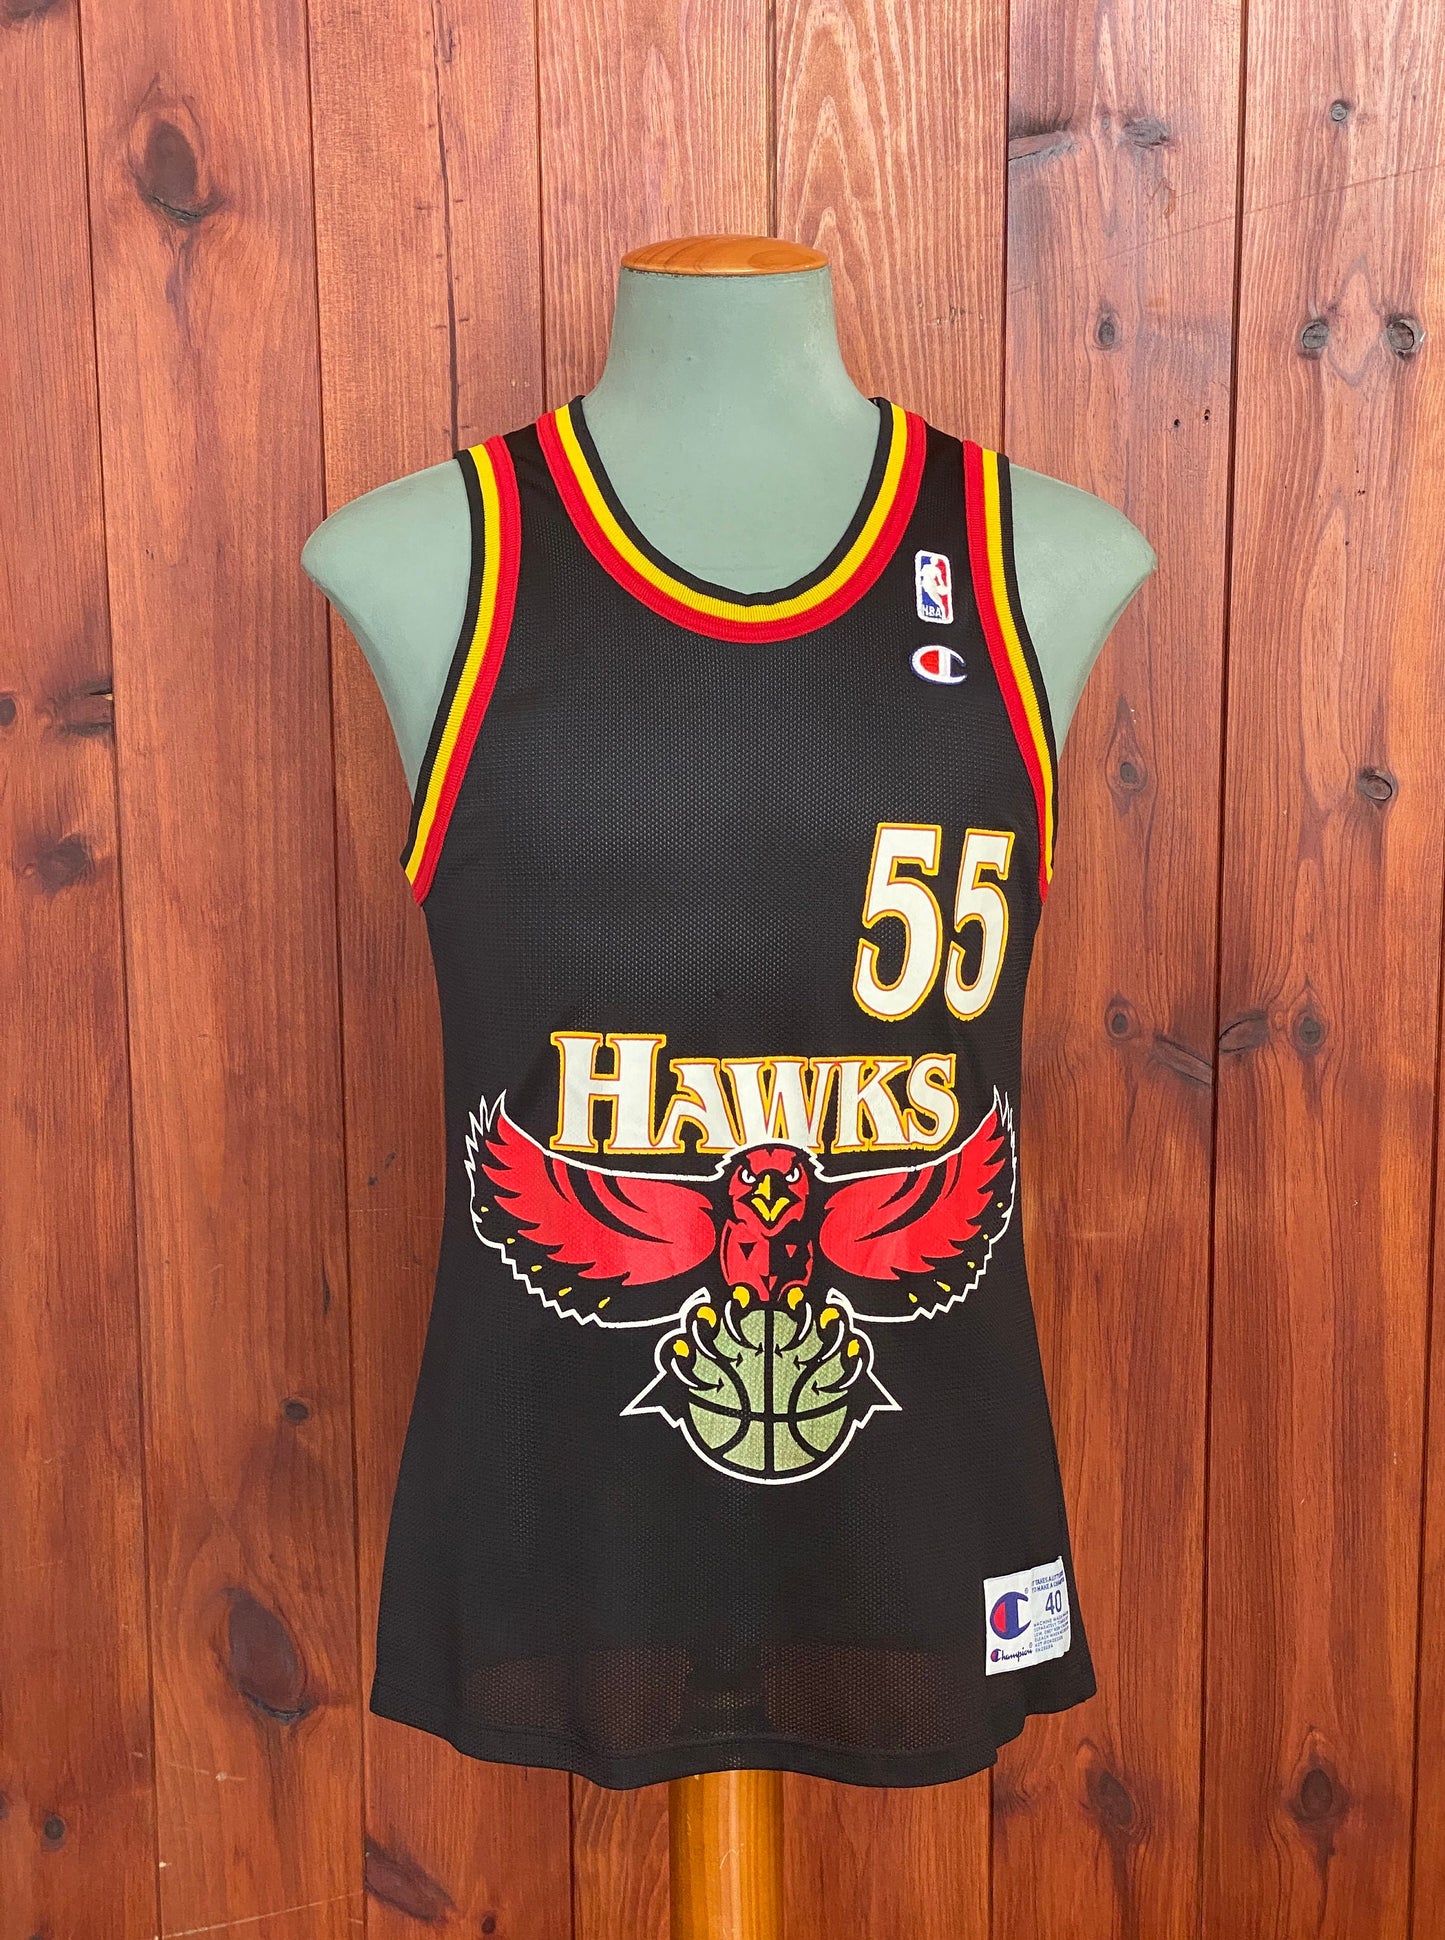 Authentic 90s Vintage NBA Jersey - #55 Dikembe Mutombo Hawks - Size 40, Made by Champion